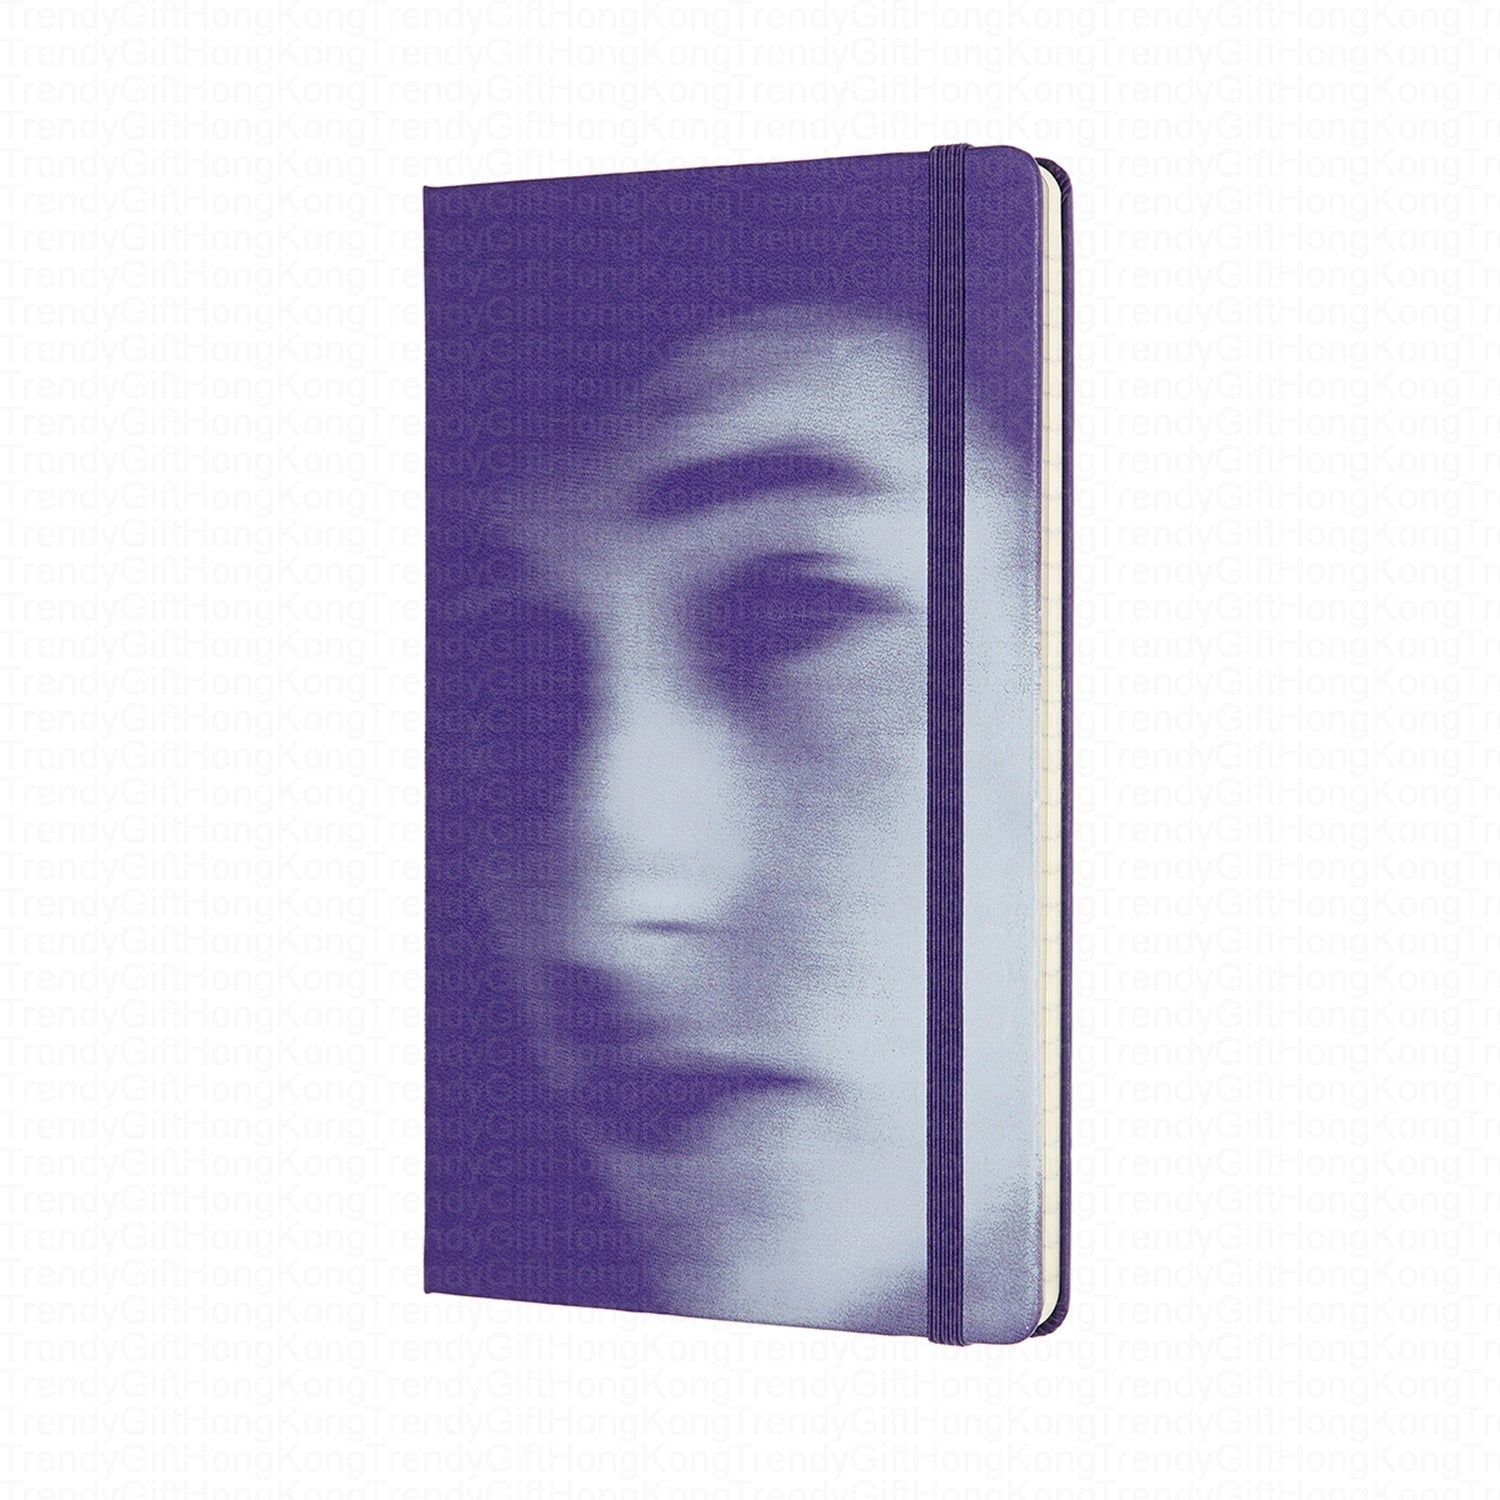 Moleskine Limited Edition Bob Dylan Large Ruled Notebook - Iconic Tribute 13 x 21 CM trendygifthk